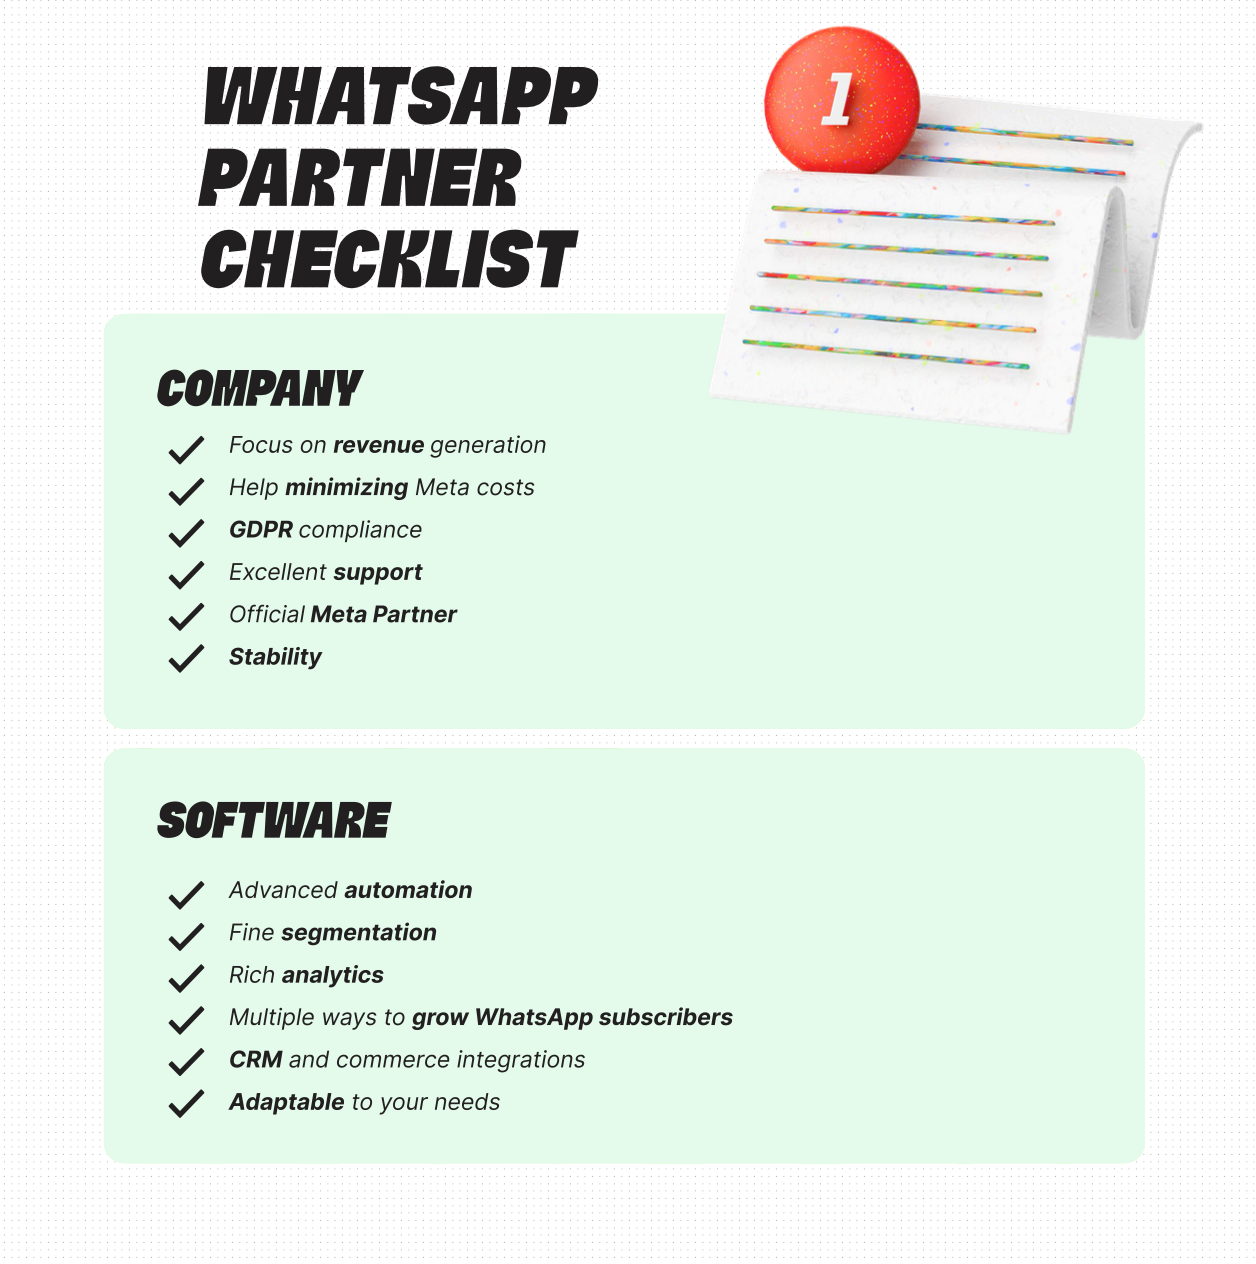 WhatsApp partner checklist - charles